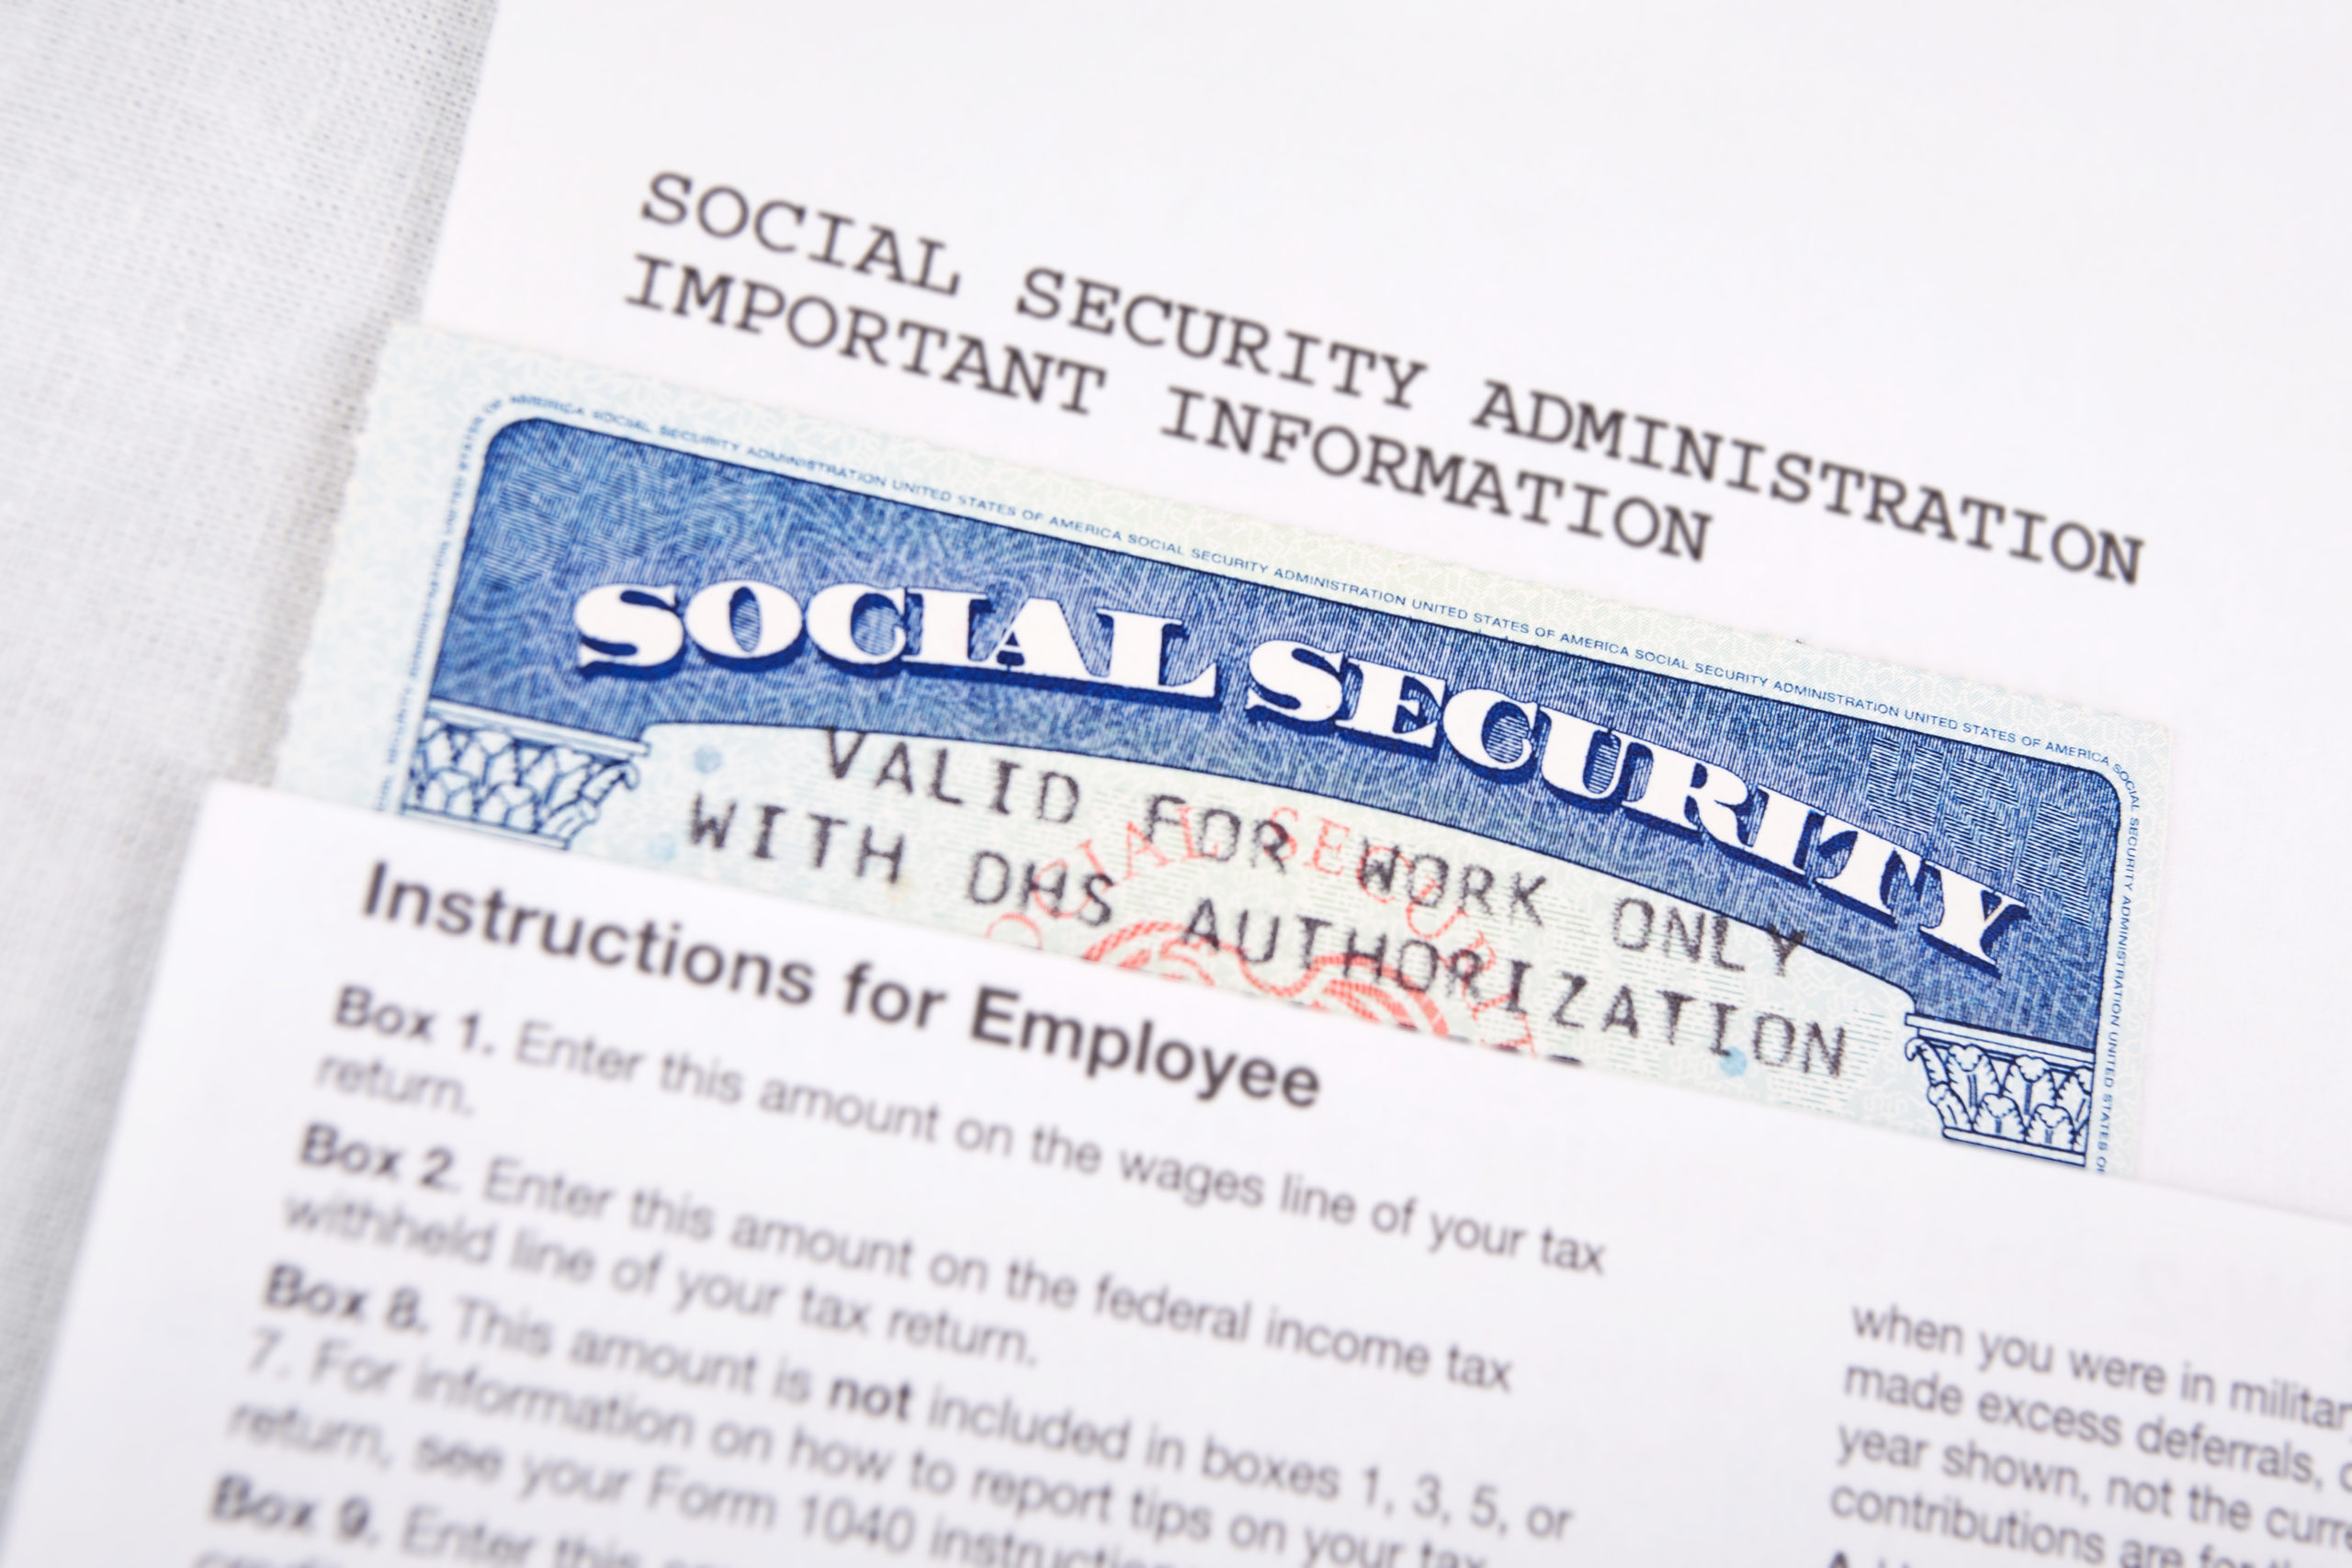 obtaining social security card guardianship papers